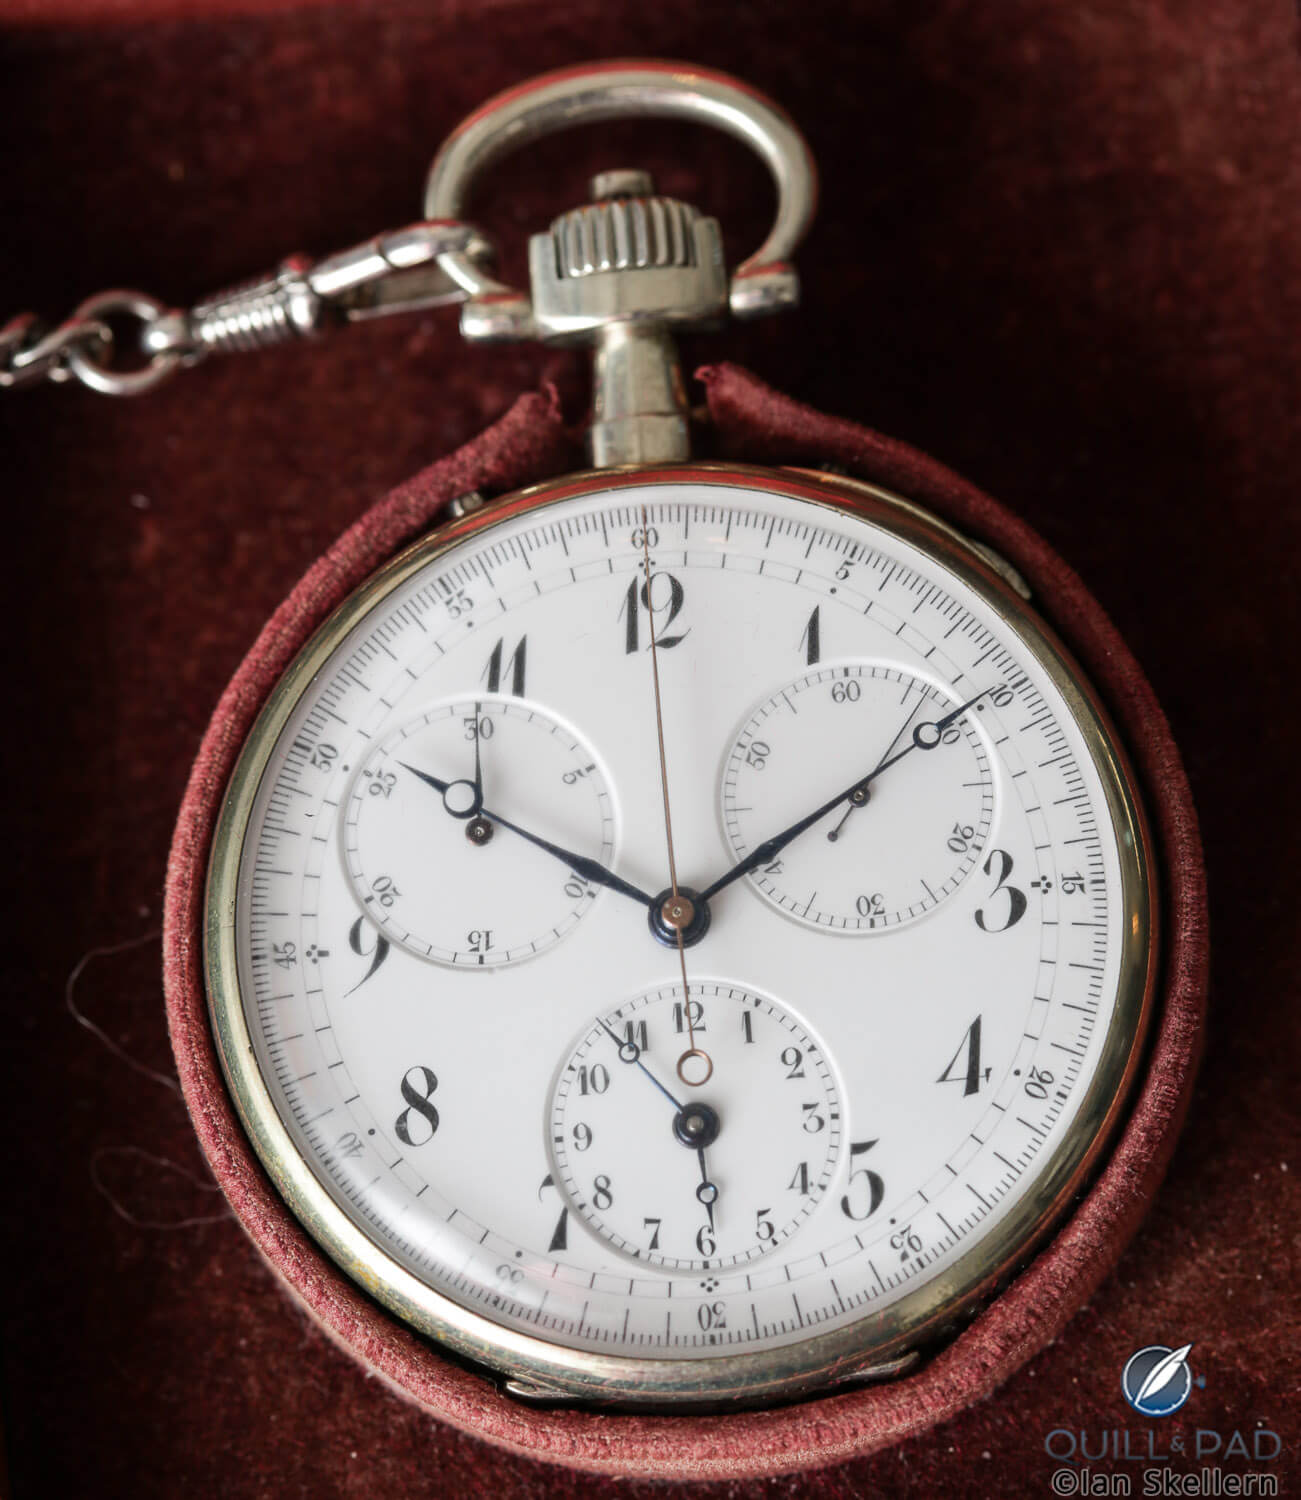 Perhaps the crown jewel of Gerd-Rüdiger Lang’s chronograph collection: a Matthias Wolfensberger unique piece